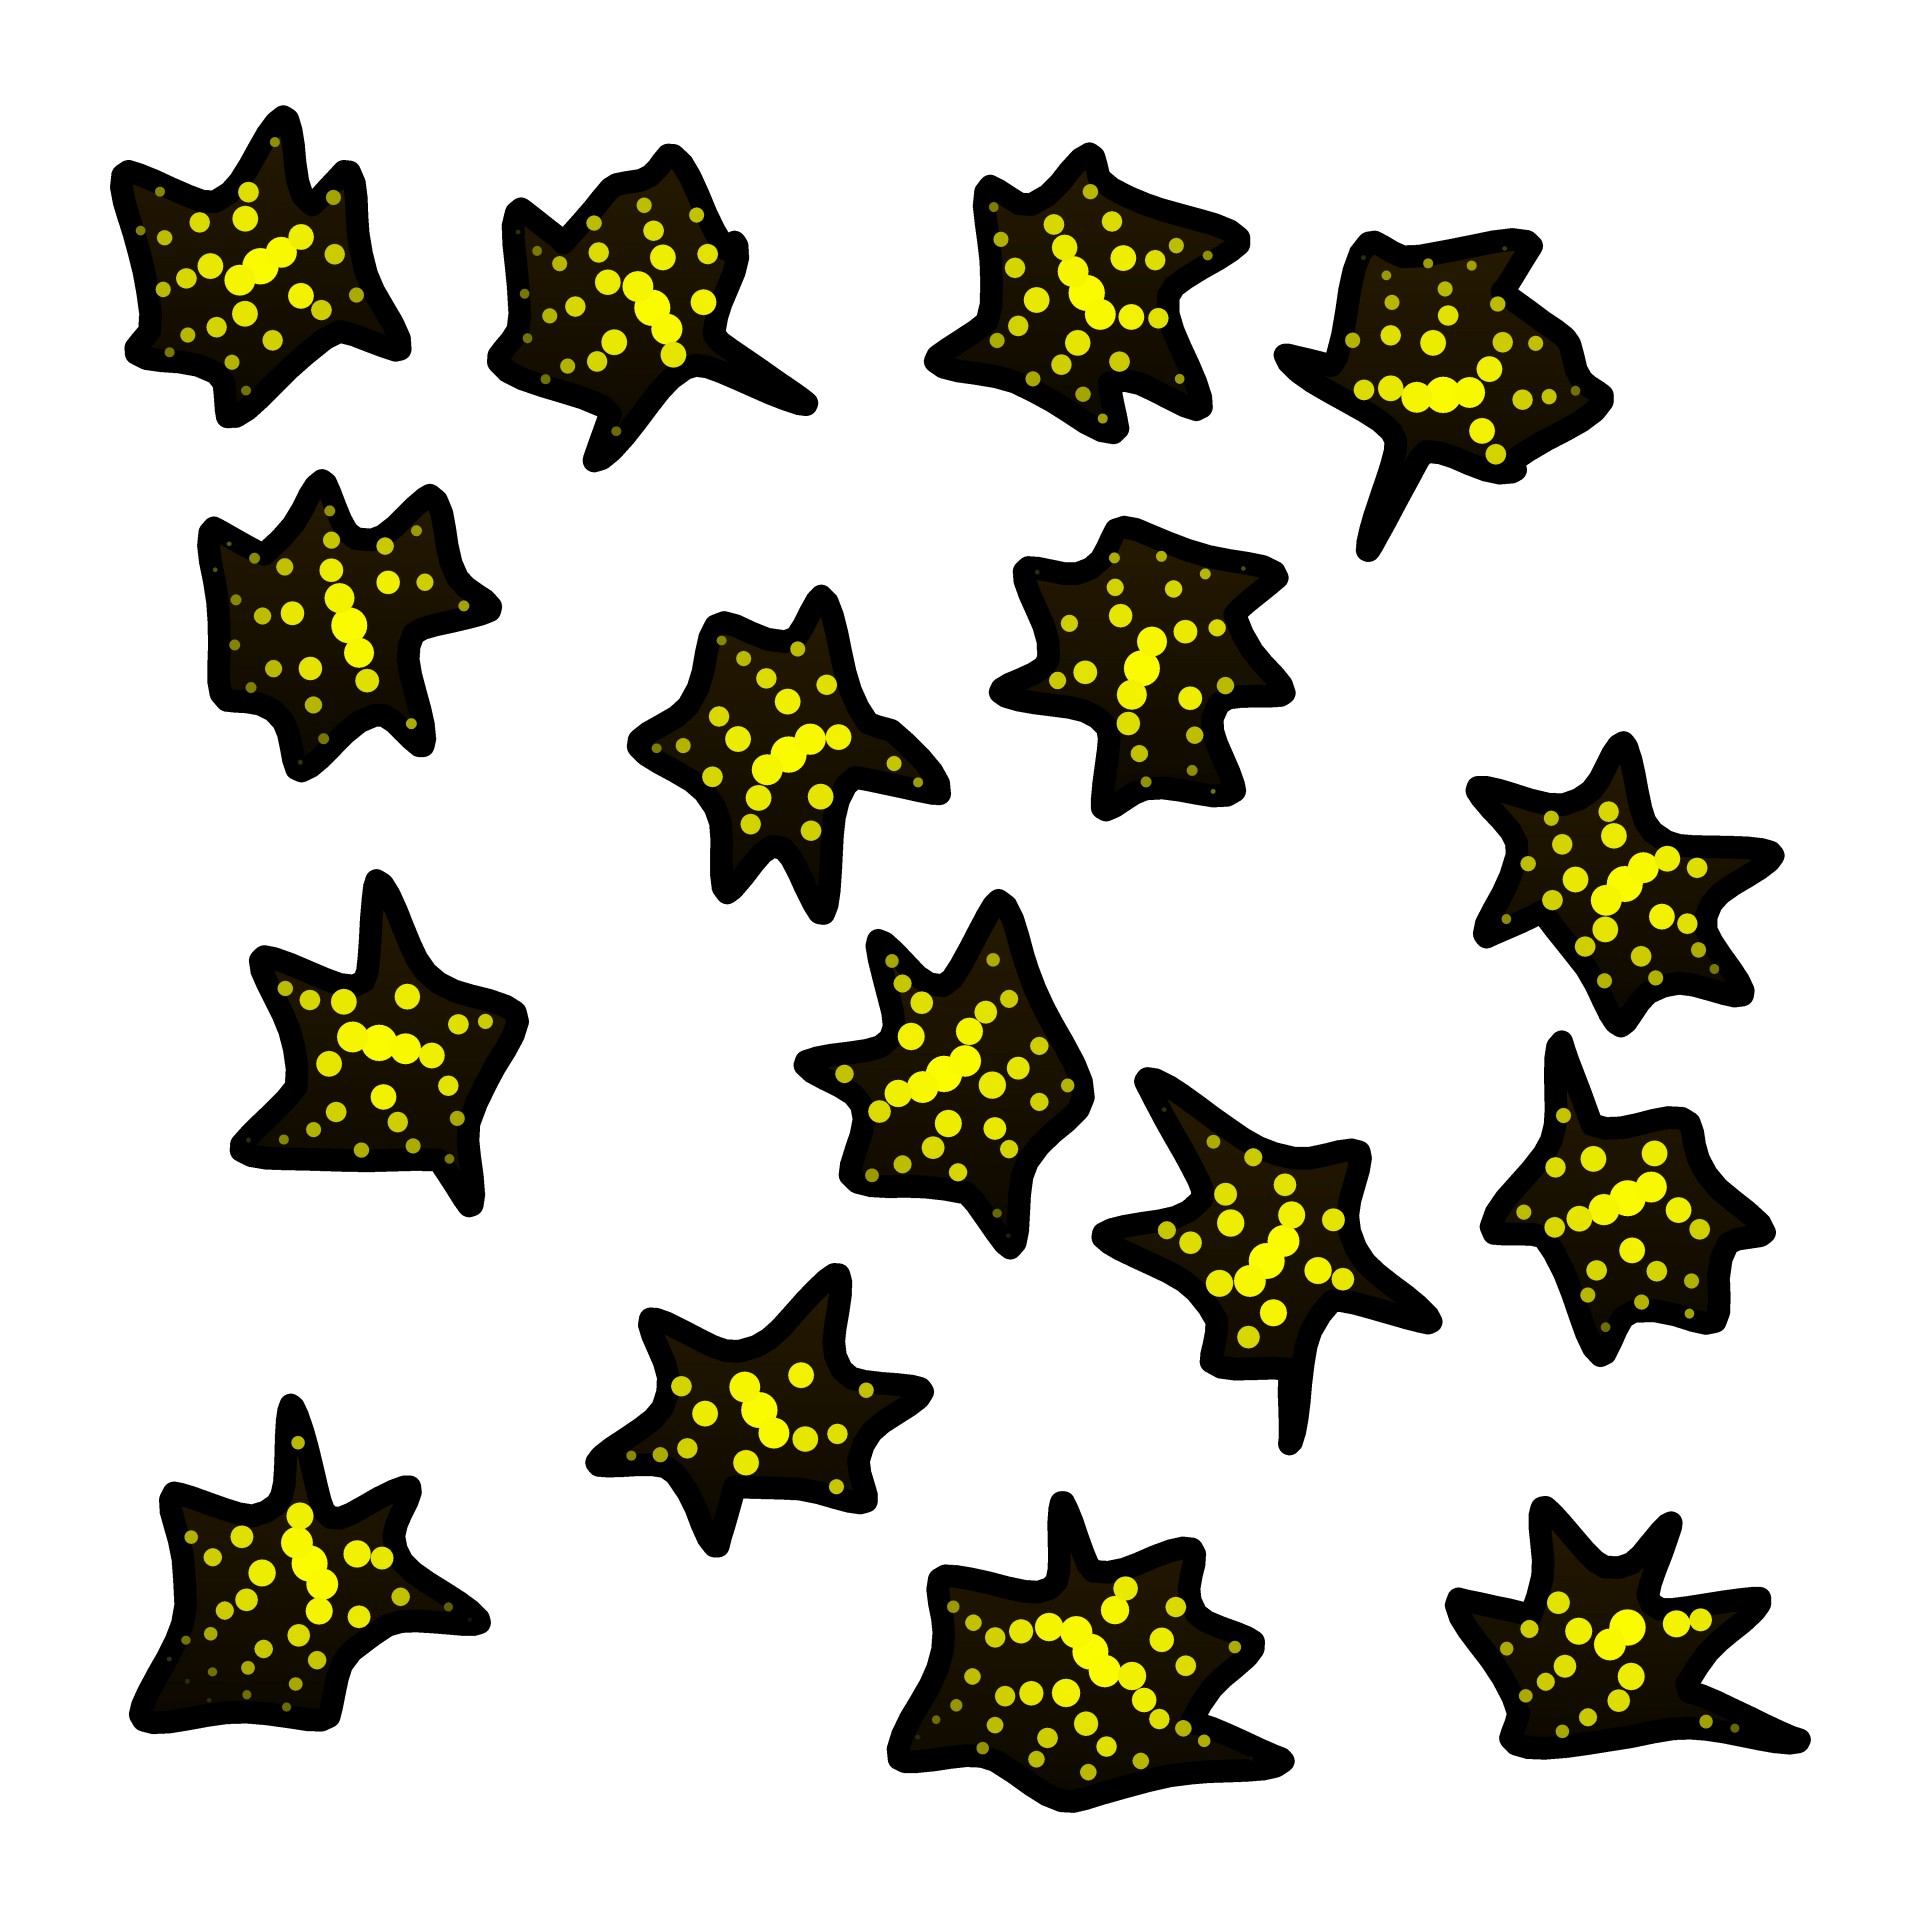 Smallest star. Маленькие звезды. Звезда маленькая. Картинки маленькие звезды. Звезда картинка маленькая.